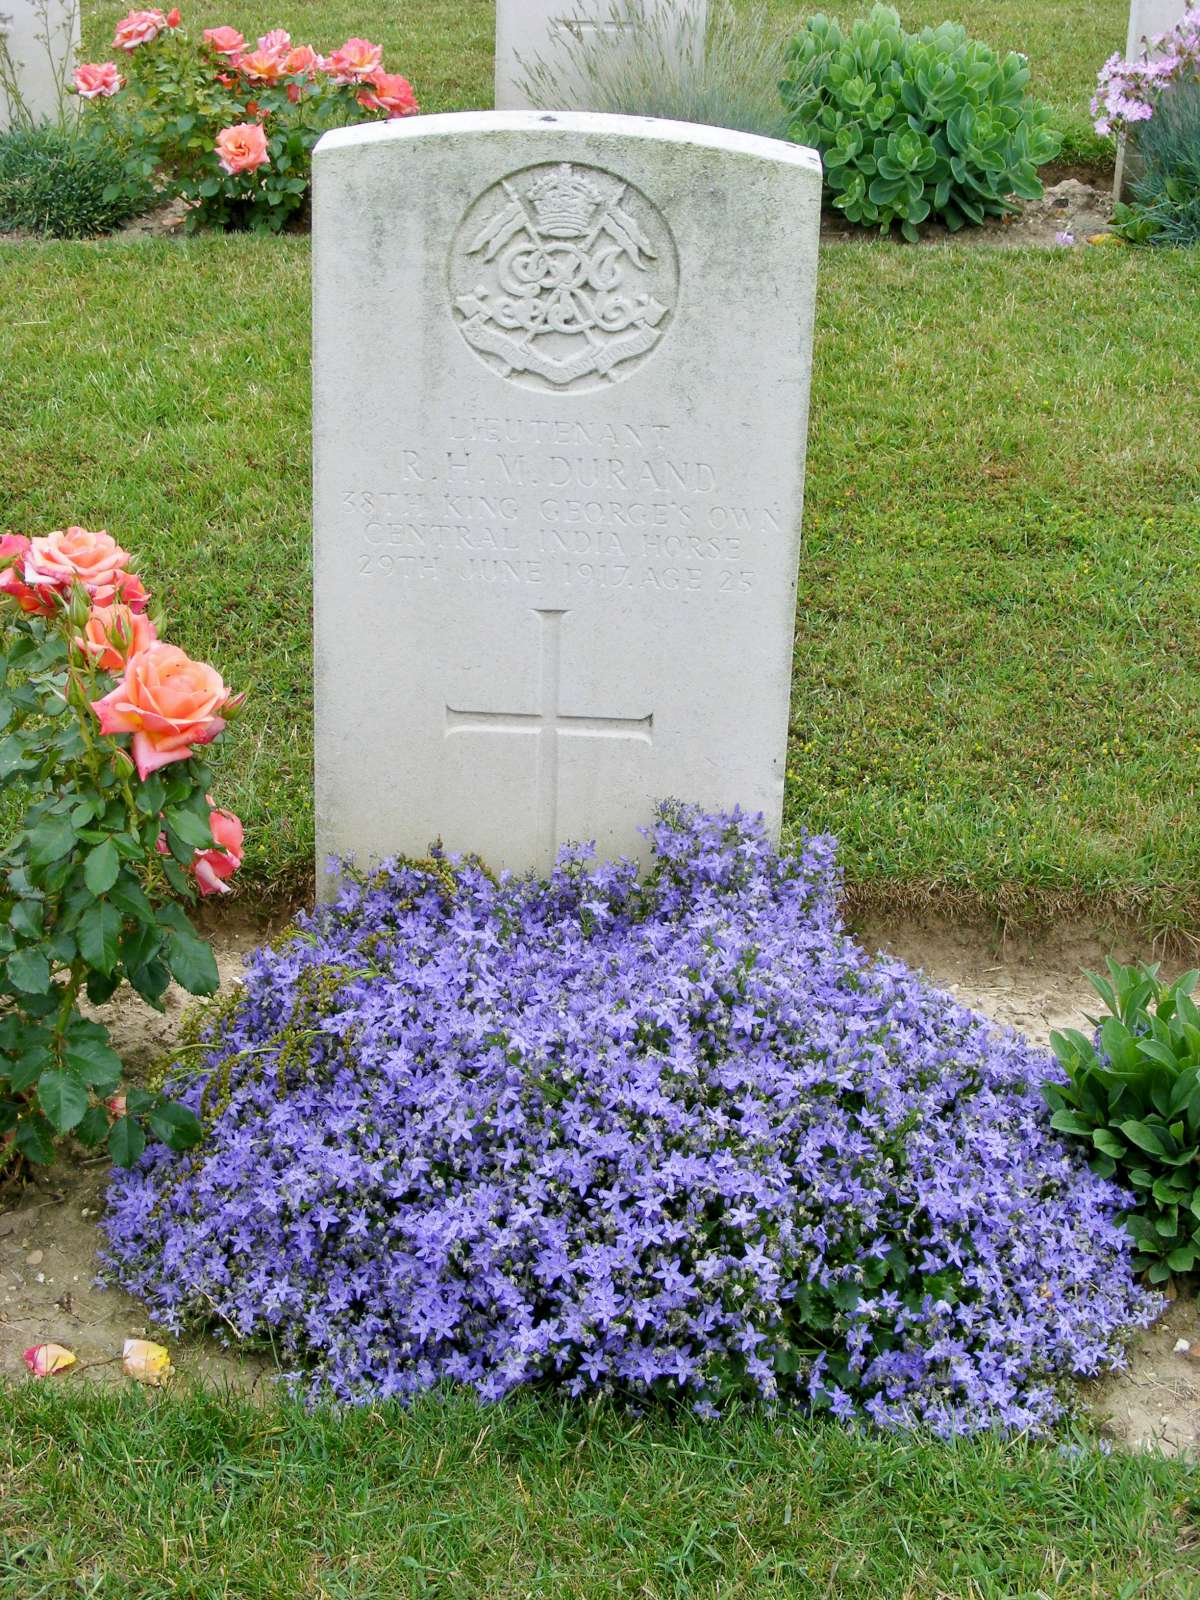 Reggie's grave marker at Tincourt Cemetery